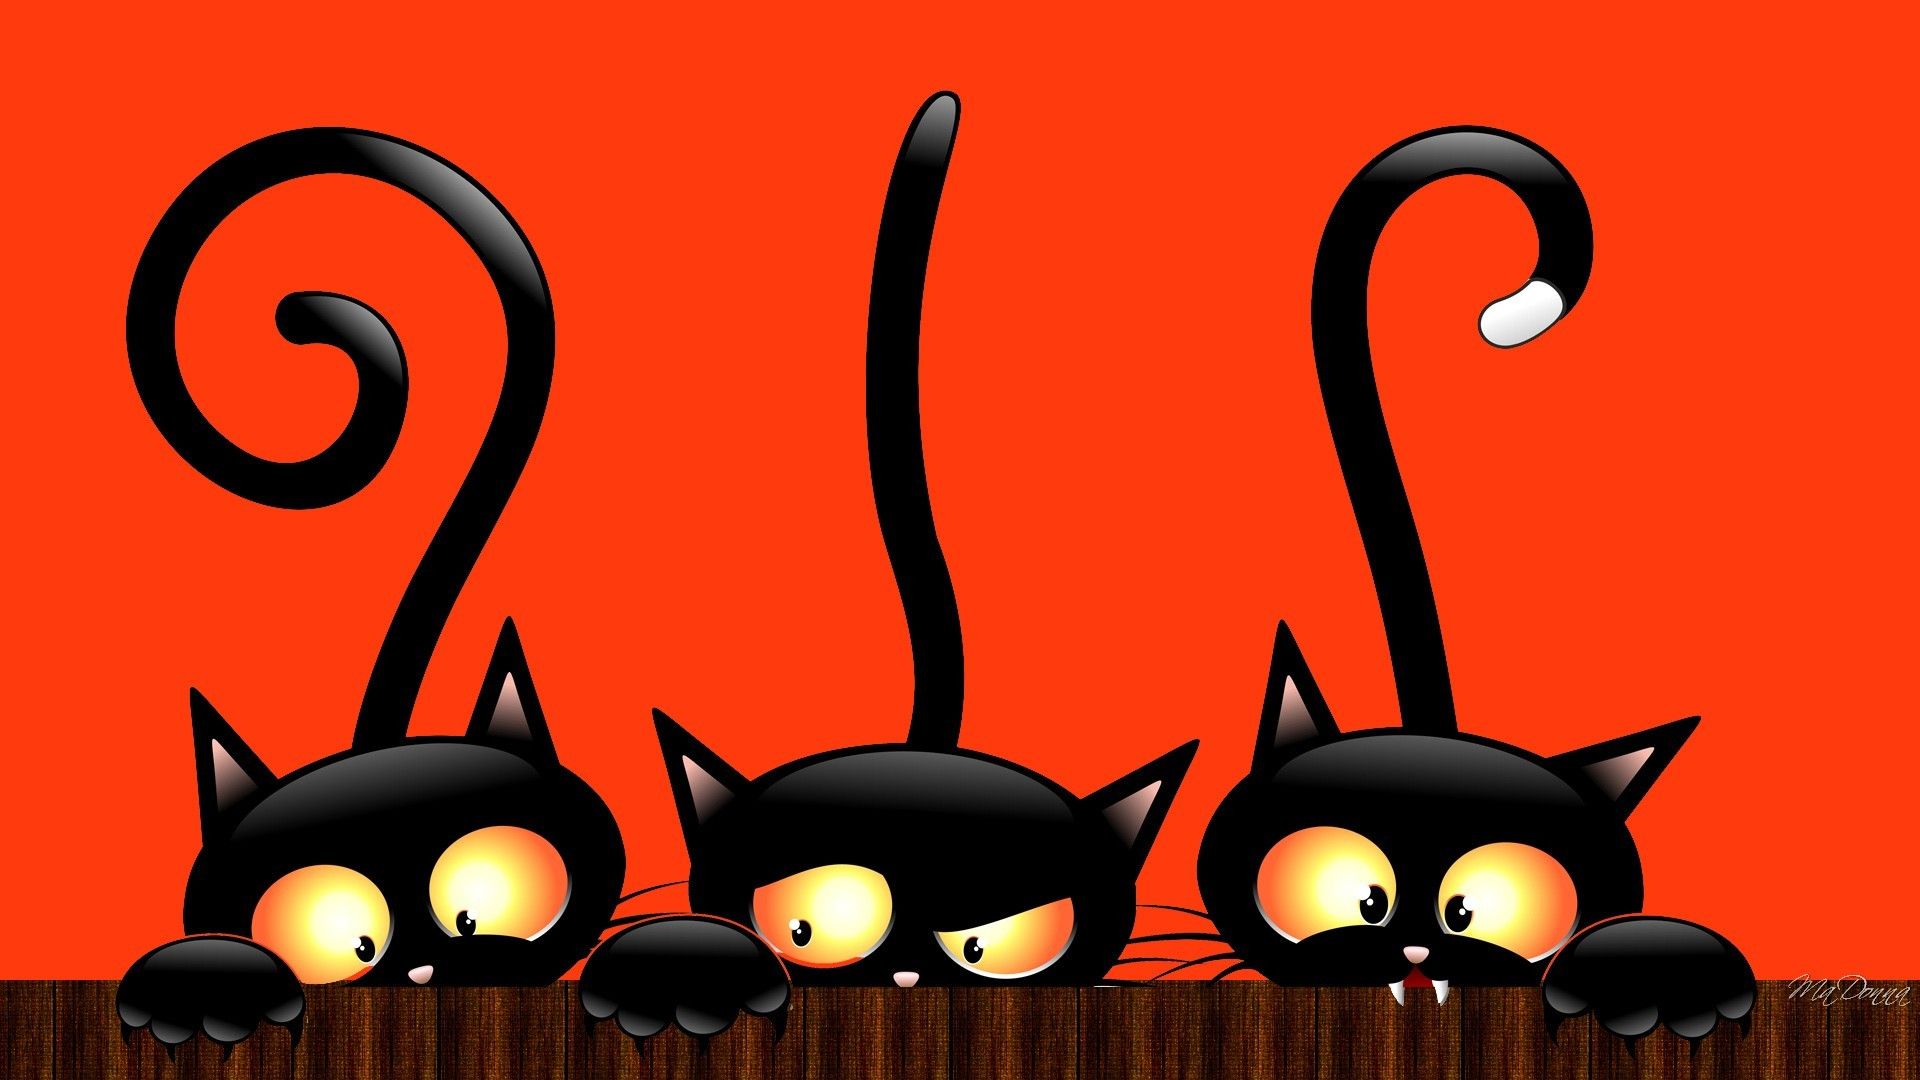 Halloween Cat Wallpaper & Background Beautiful Best Available For Download Halloween Cat Photo Free On Zicxa.com Image